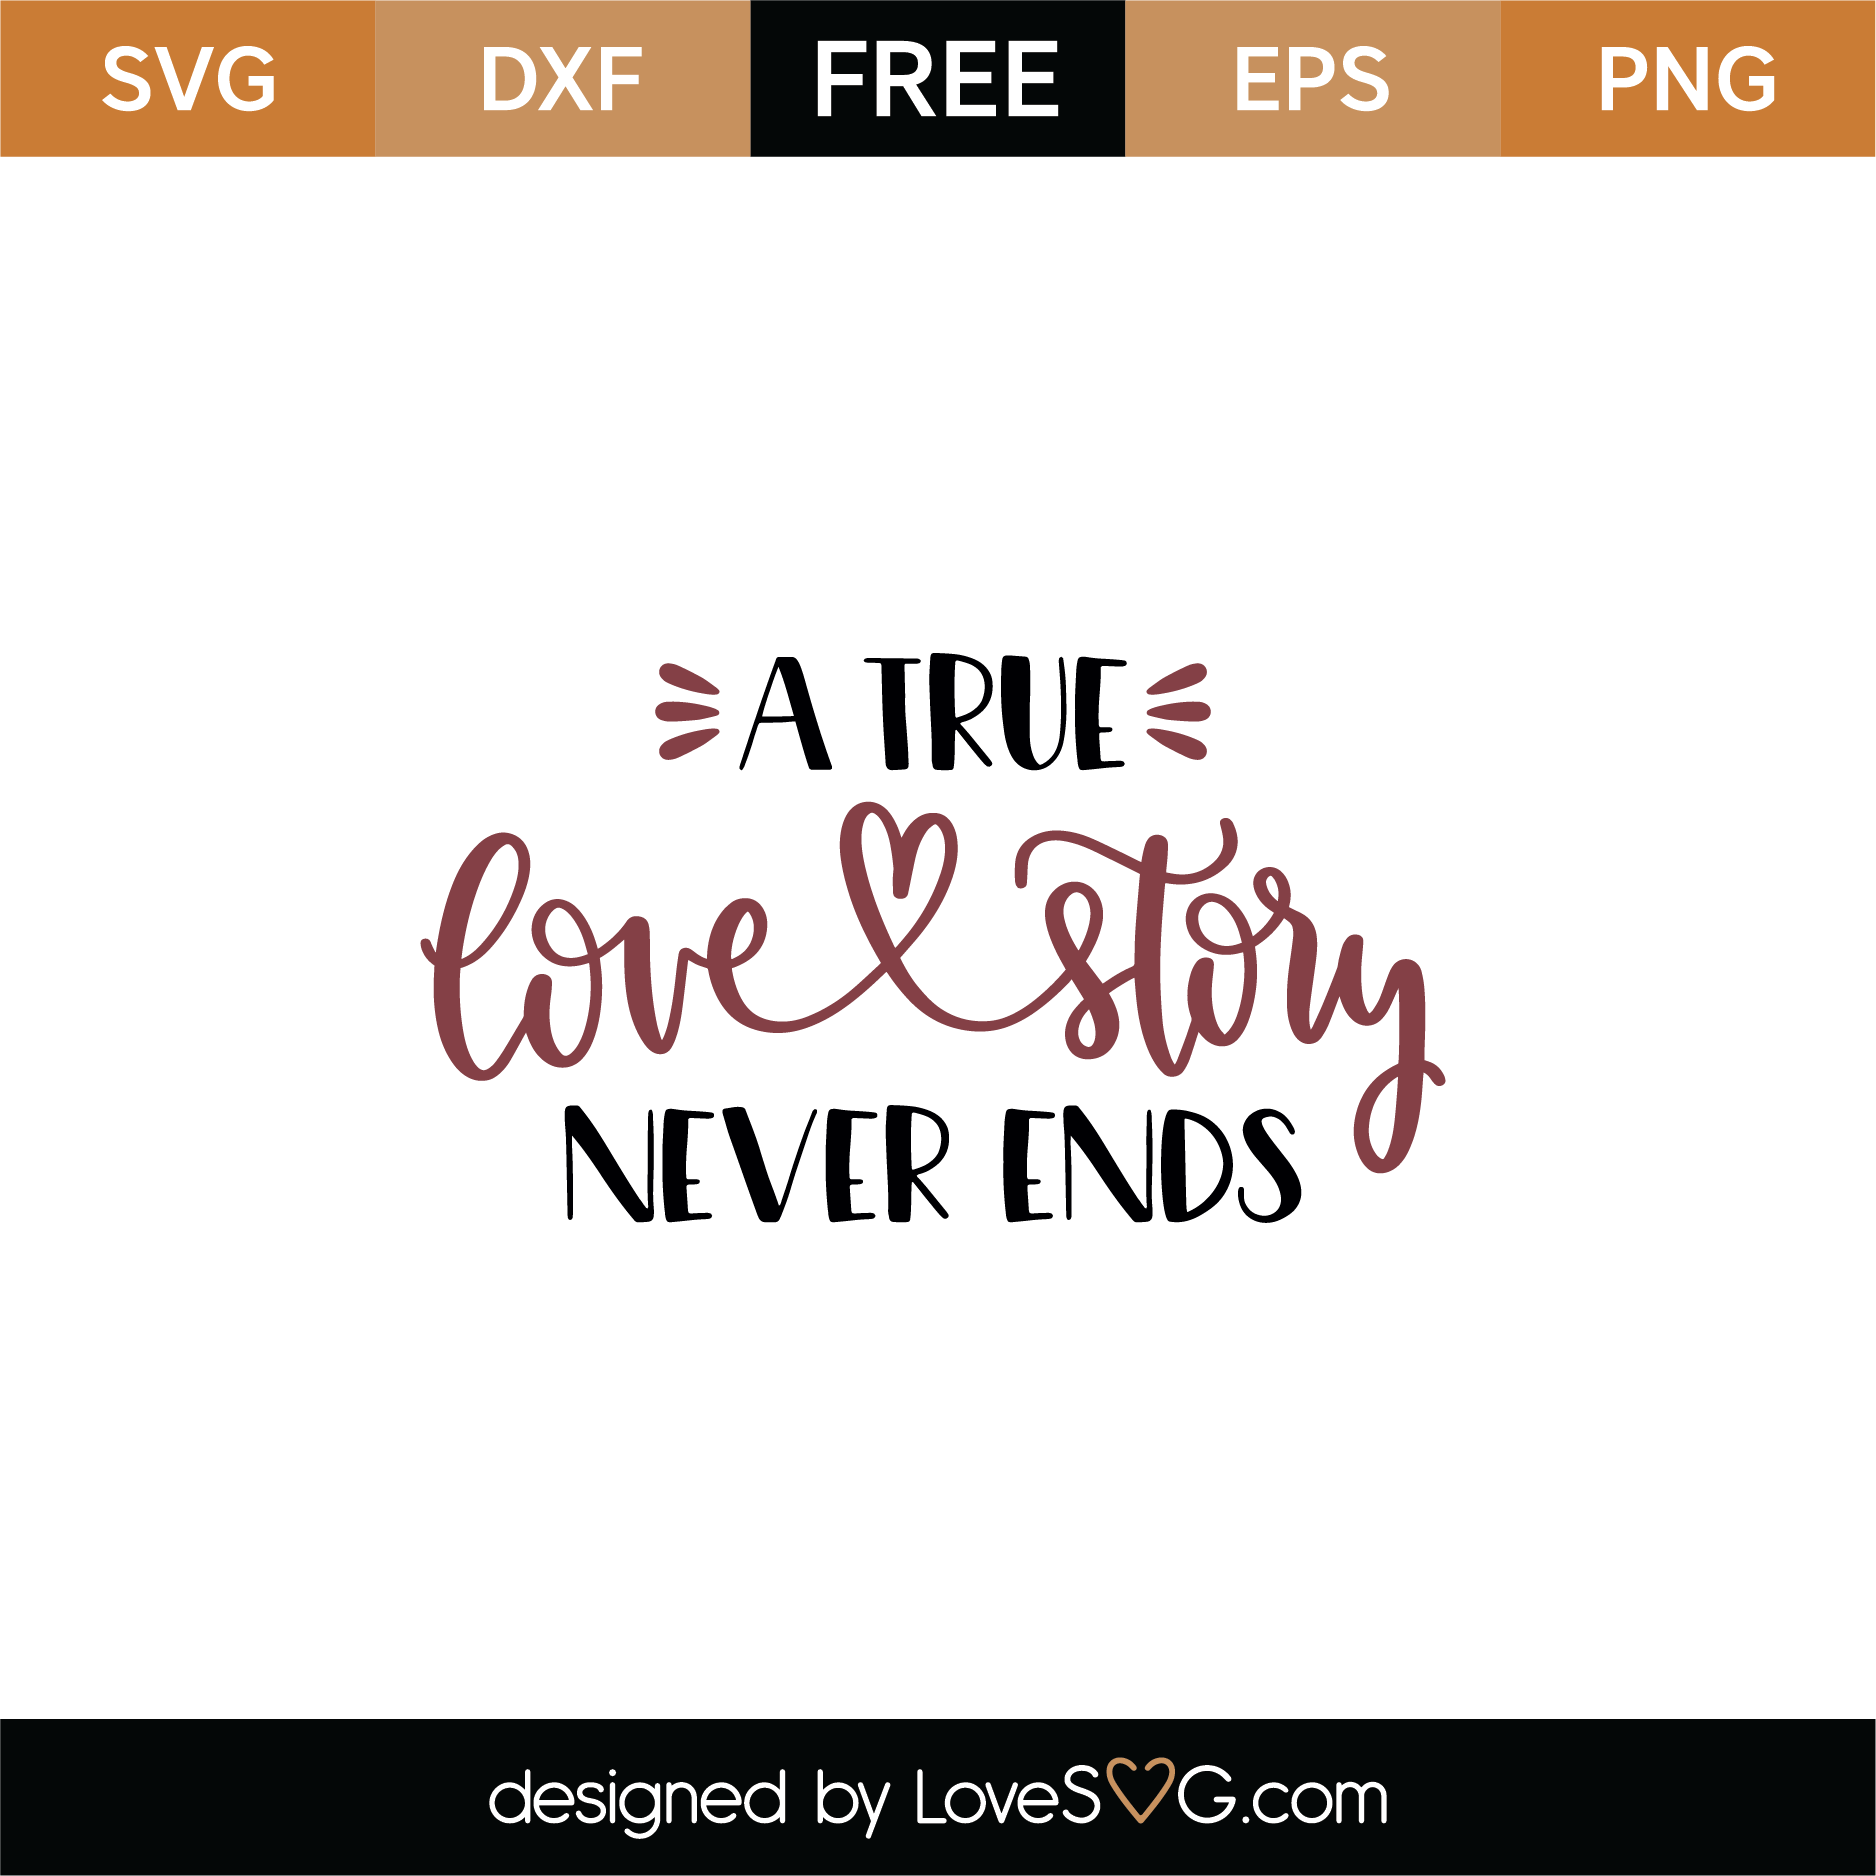 Download Free A True Love Story Never Ends SVG Cut File | Lovesvg.com